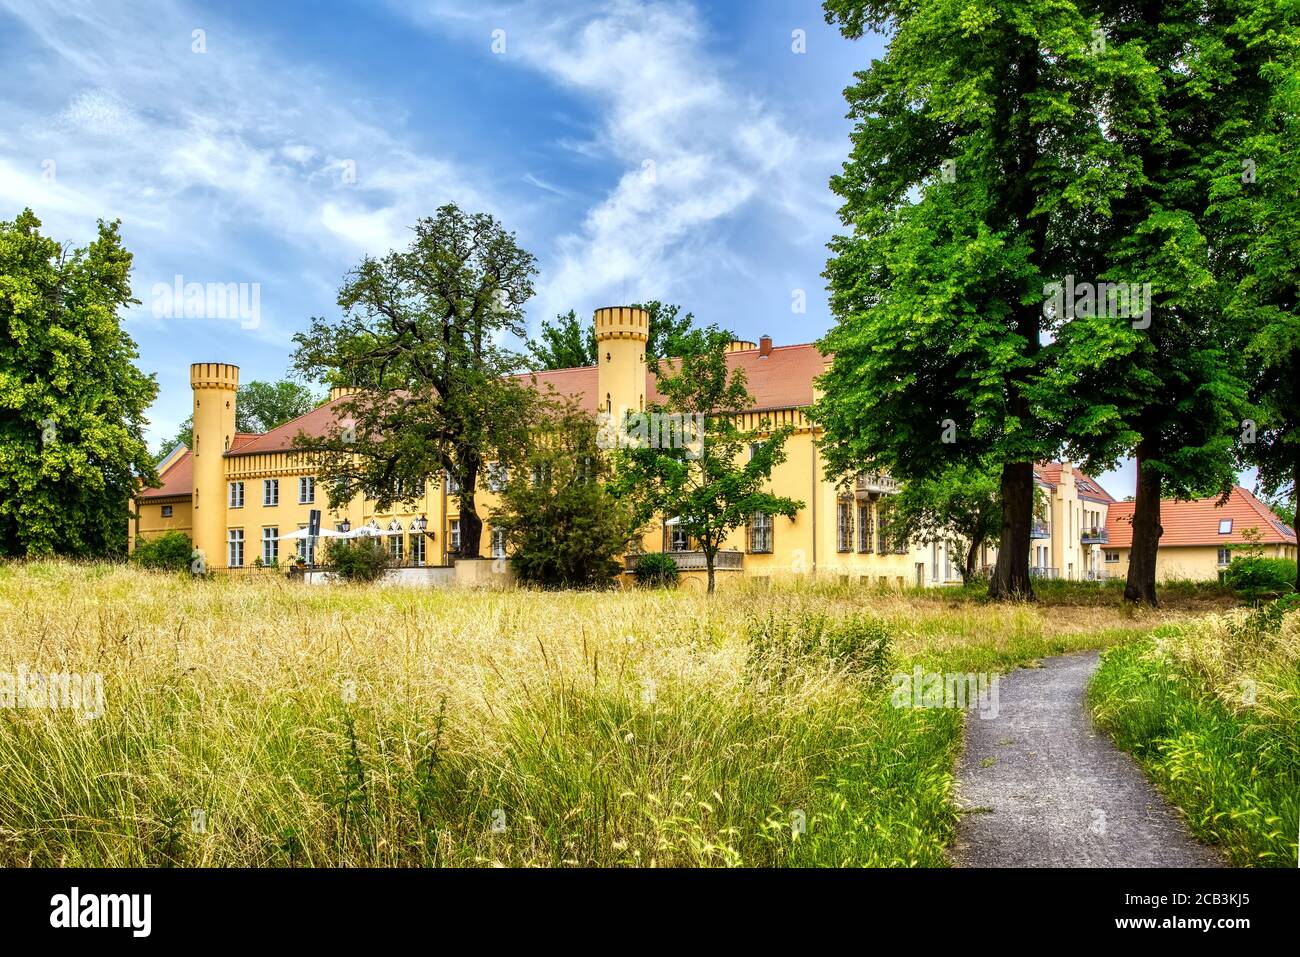 Castle Petzow near Werder, Potsdam Stock Photo